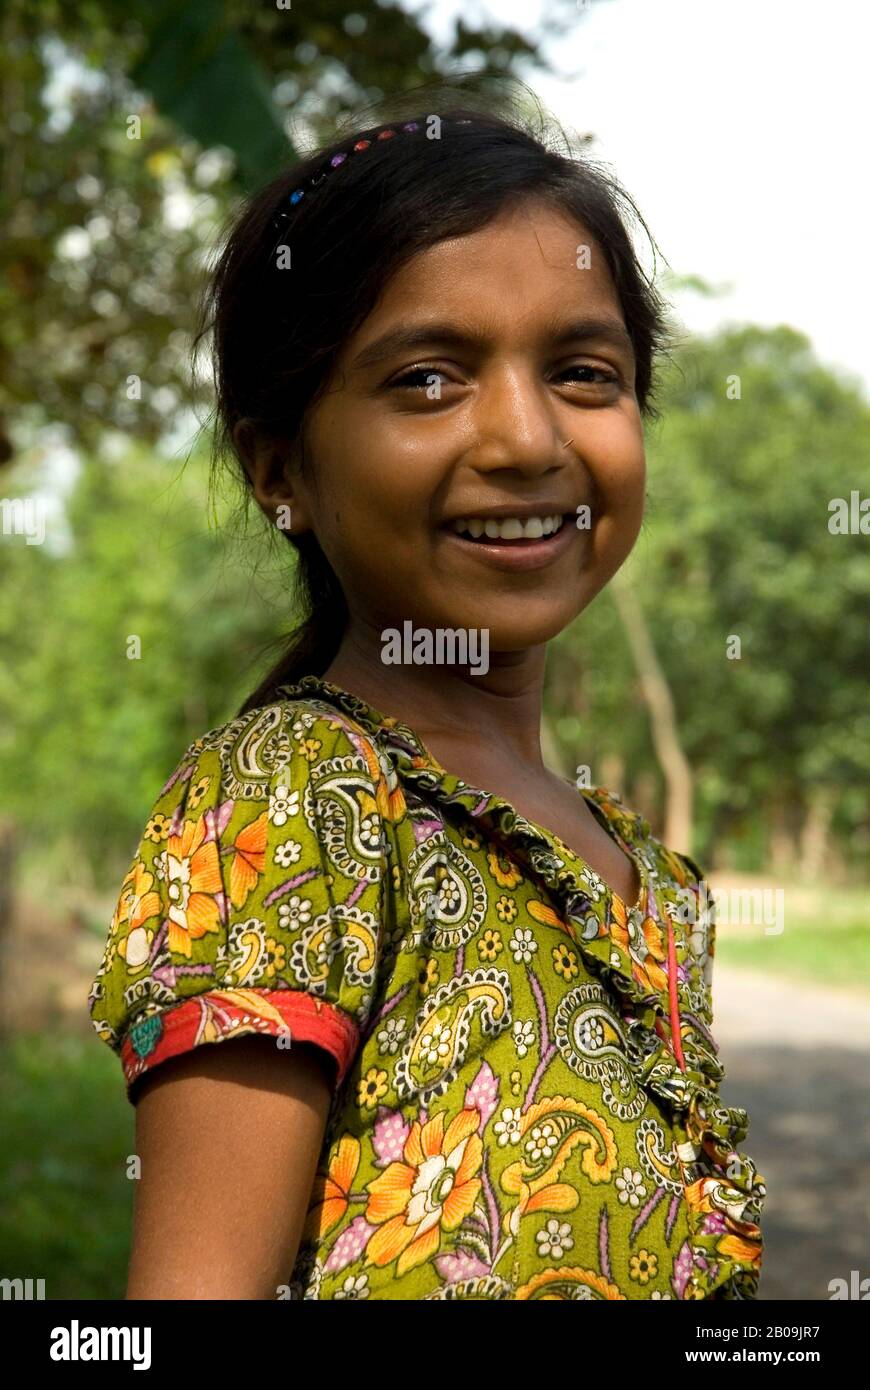 A portrait of a young girl in Matiranga, Khagrachari, Bangladesh. May 11, 2010. Stock Photo